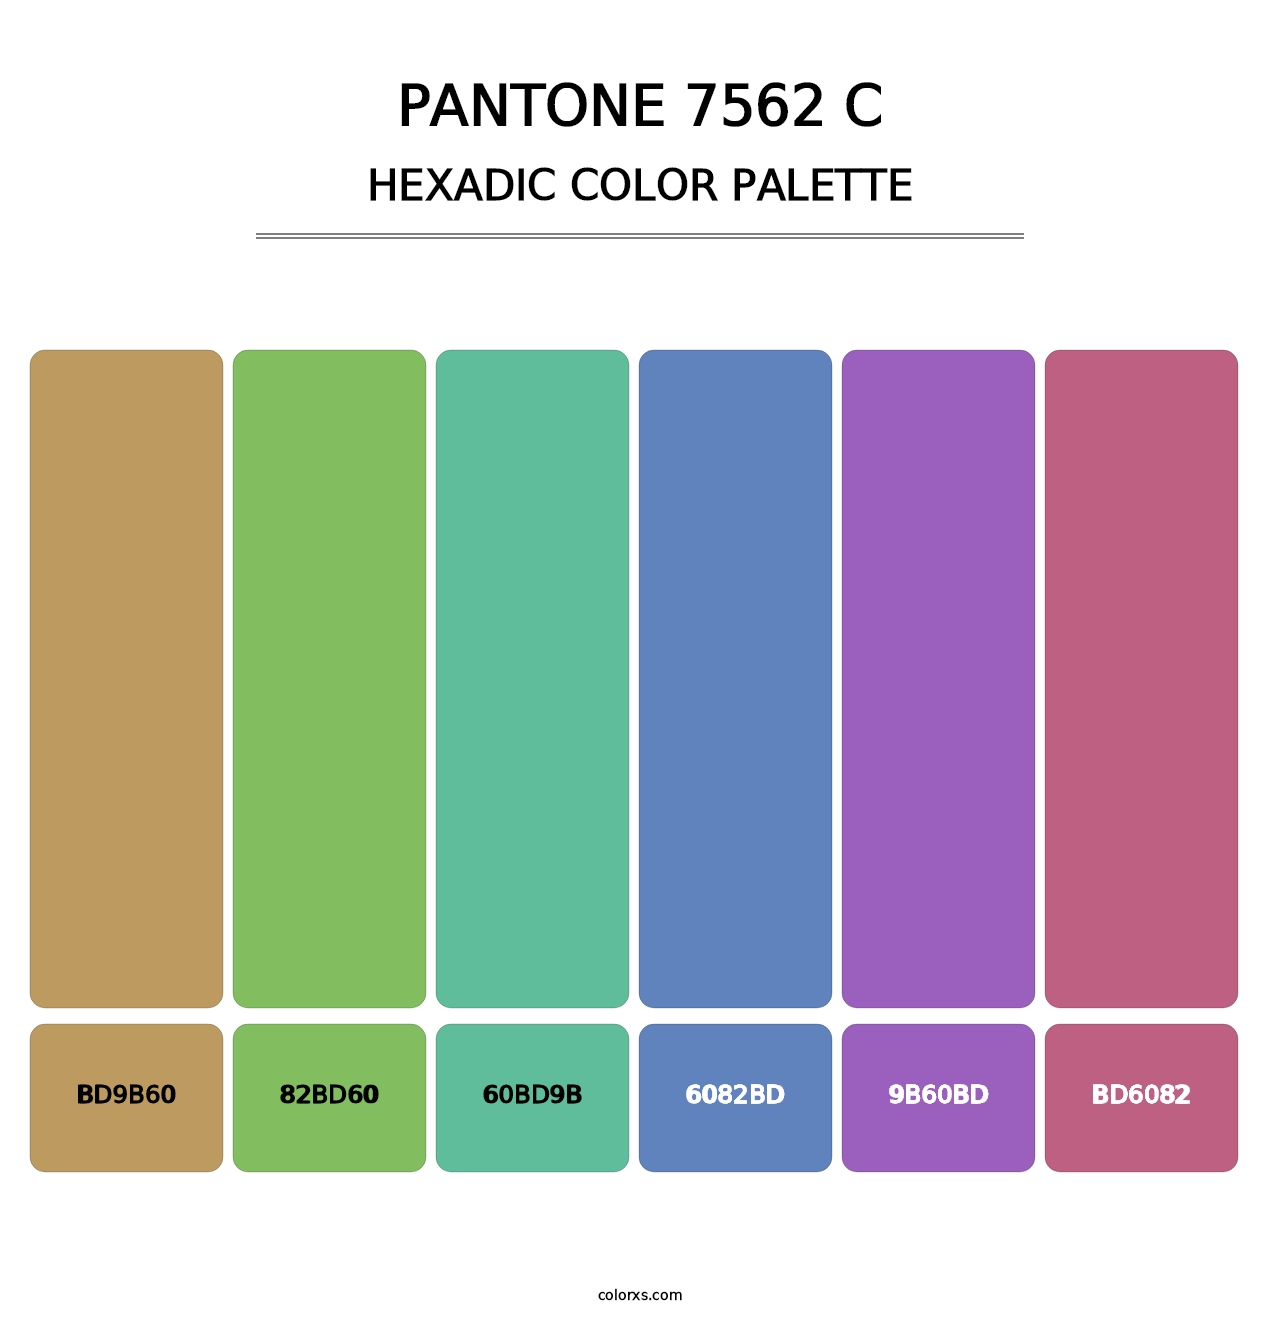 PANTONE 7562 C - Hexadic Color Palette